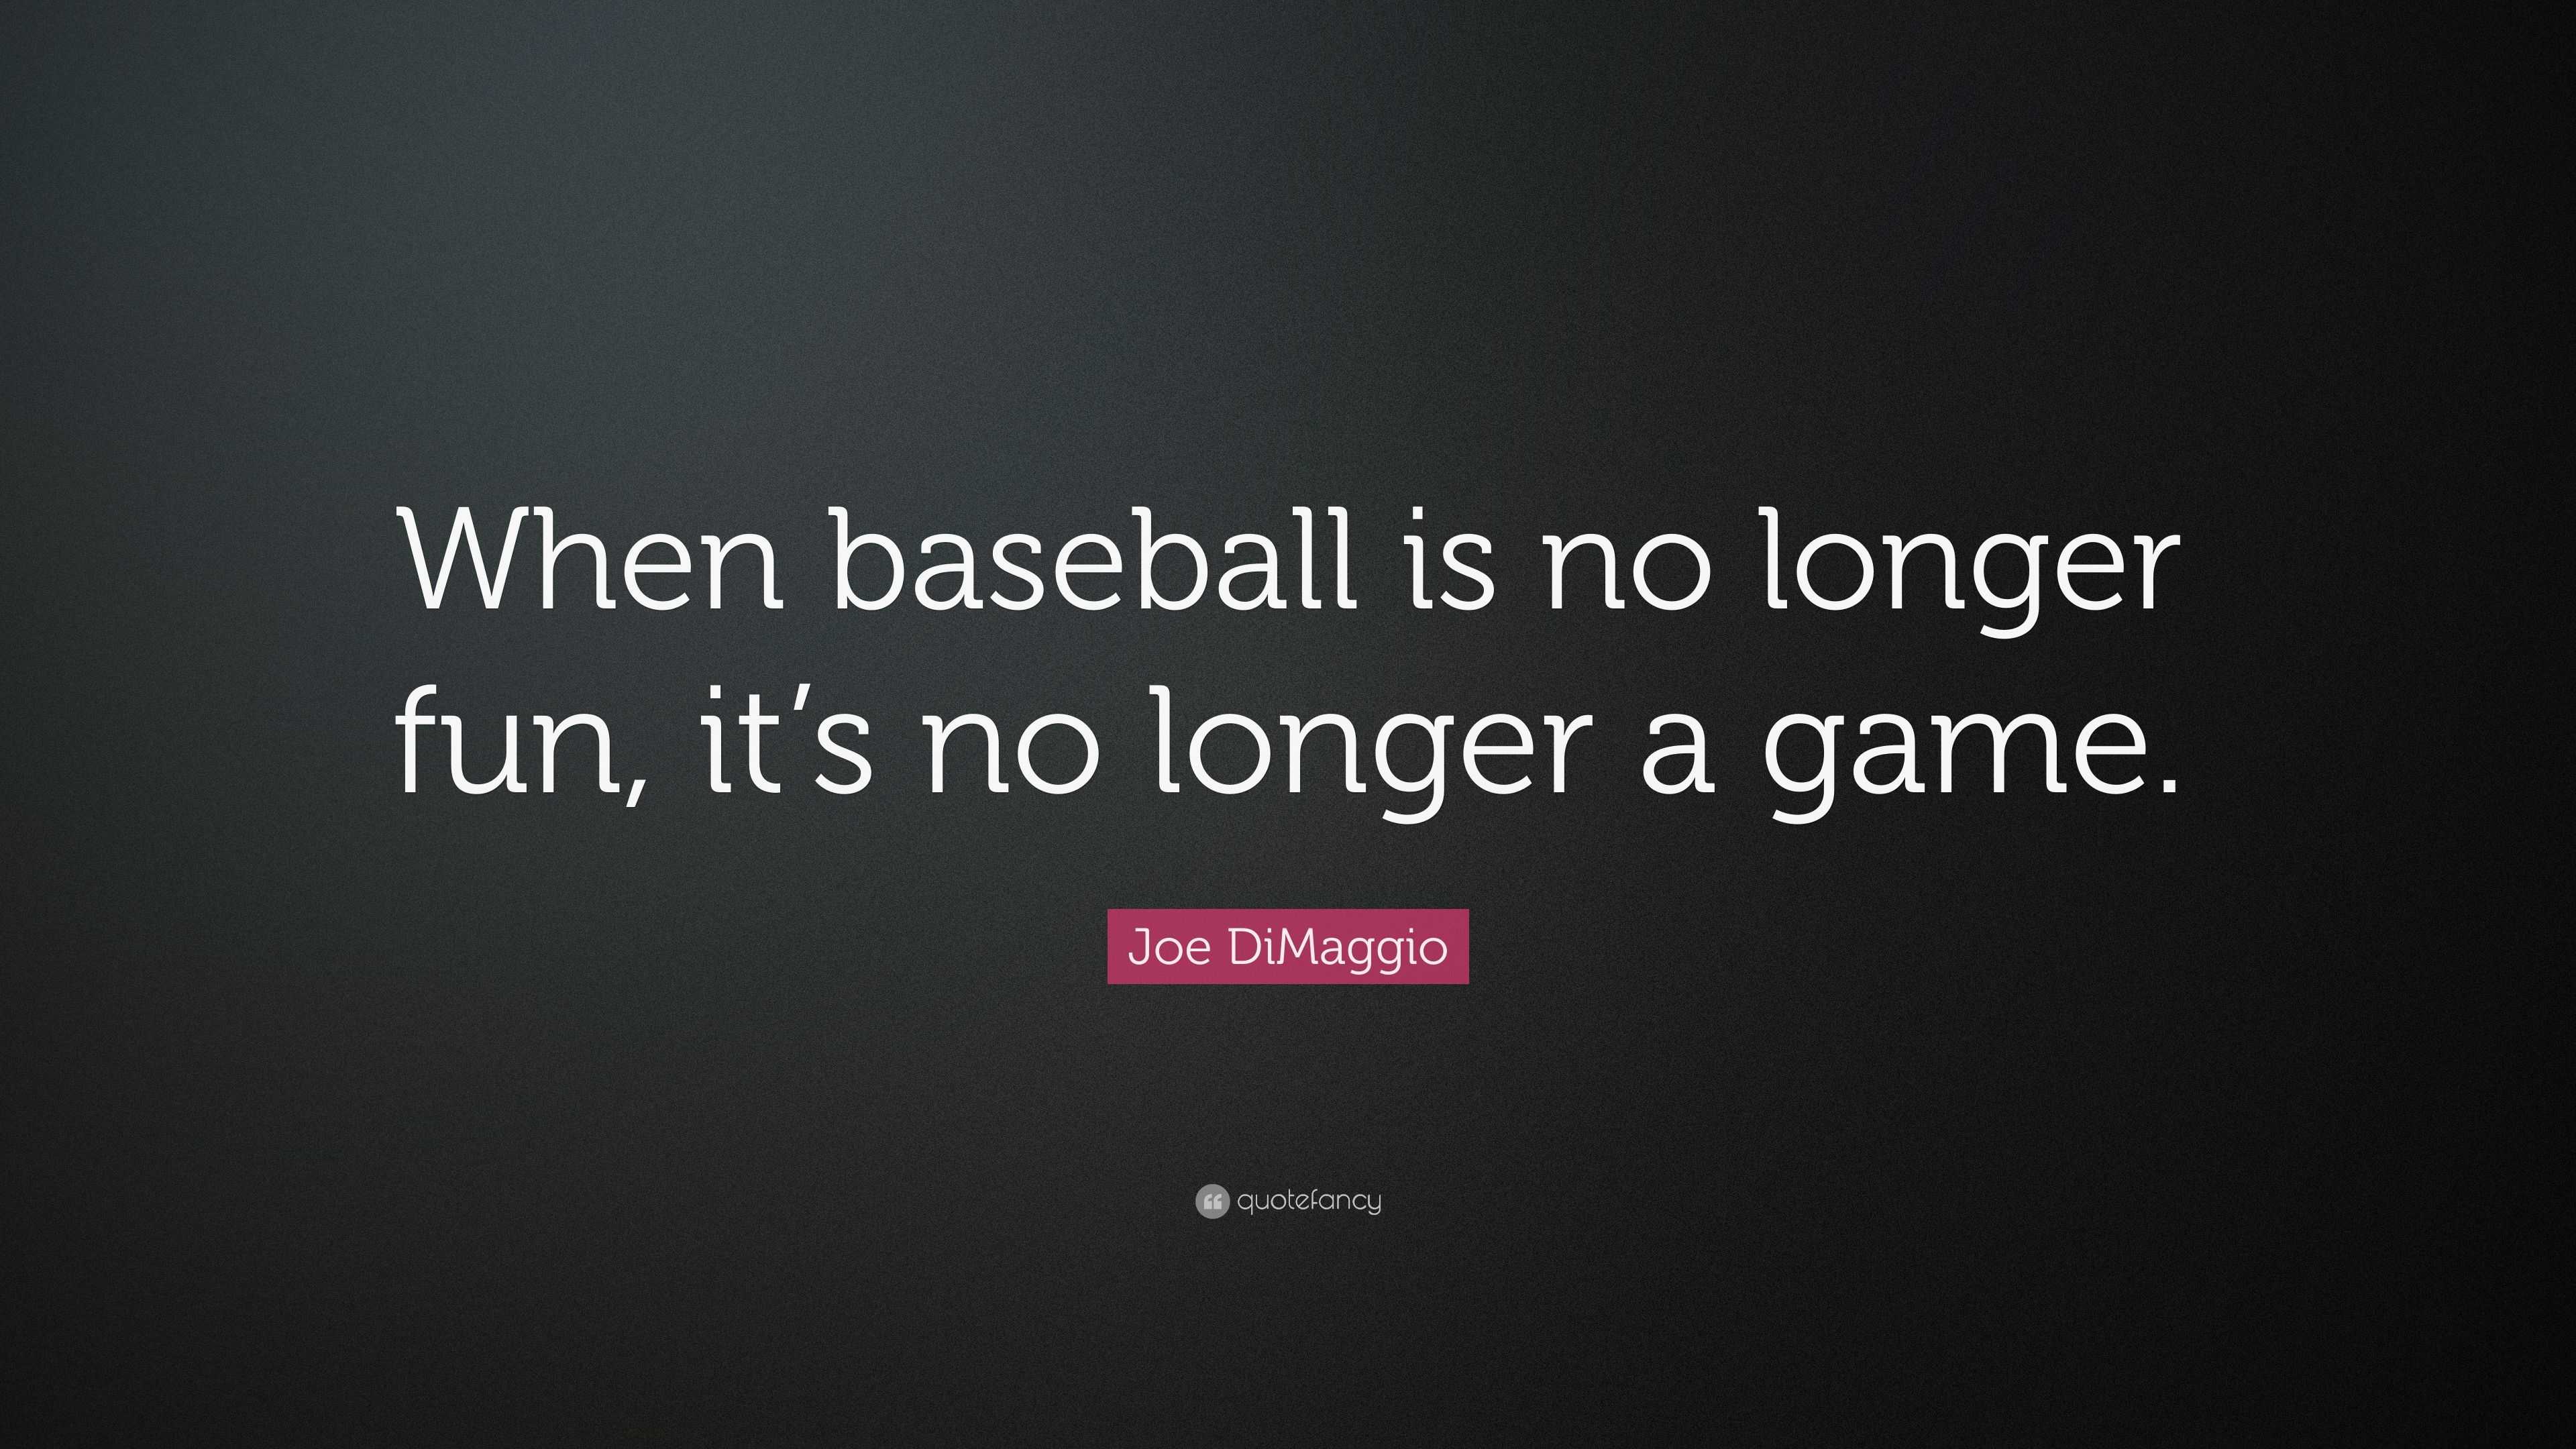 Joe DiMaggio Quote: “When baseball is no longer fun, it’s no longer a ...